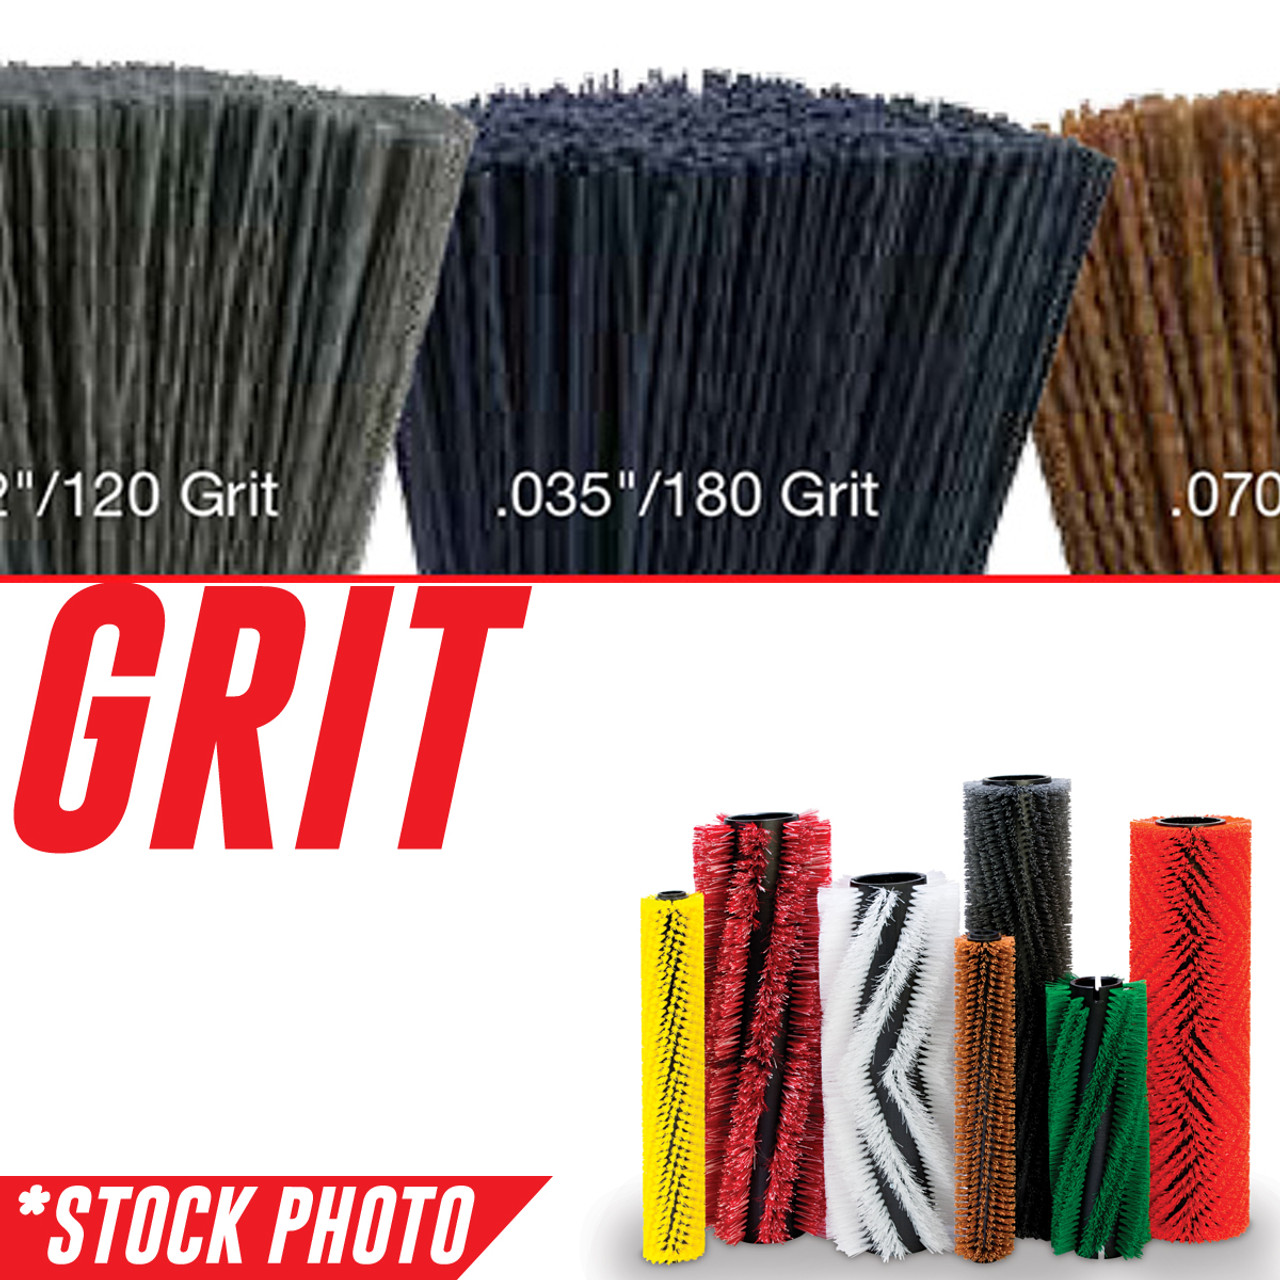 56410296: 38" Cylindrical Brush 16 Single Row .035"/180 Grit fits Advance-Nilfisk Models Adgressor 3820, Retriever 3800